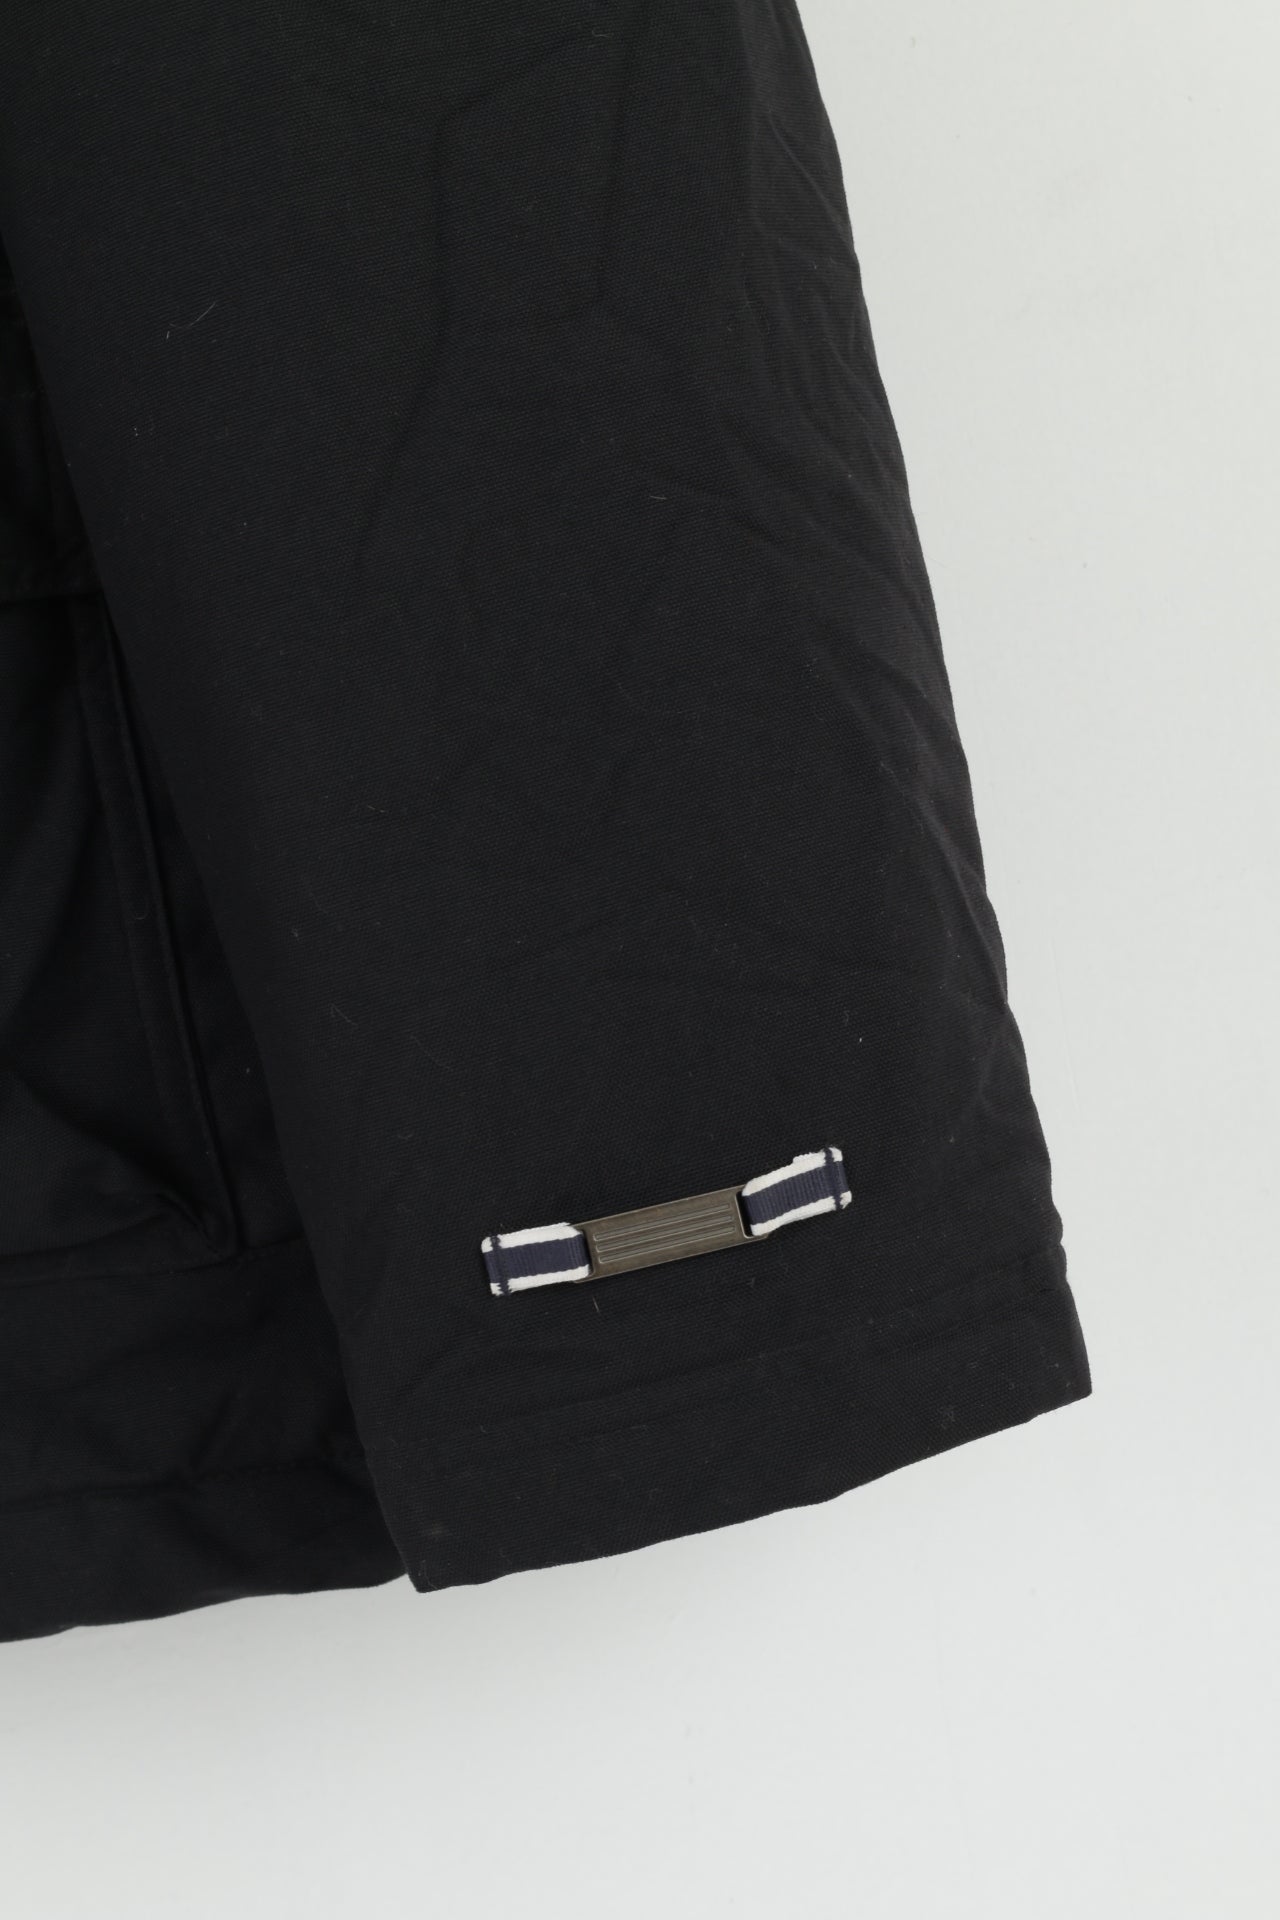 Adidas Men L Jacket Black Nylon Waterproof Full Zipper Multi Pocket Top